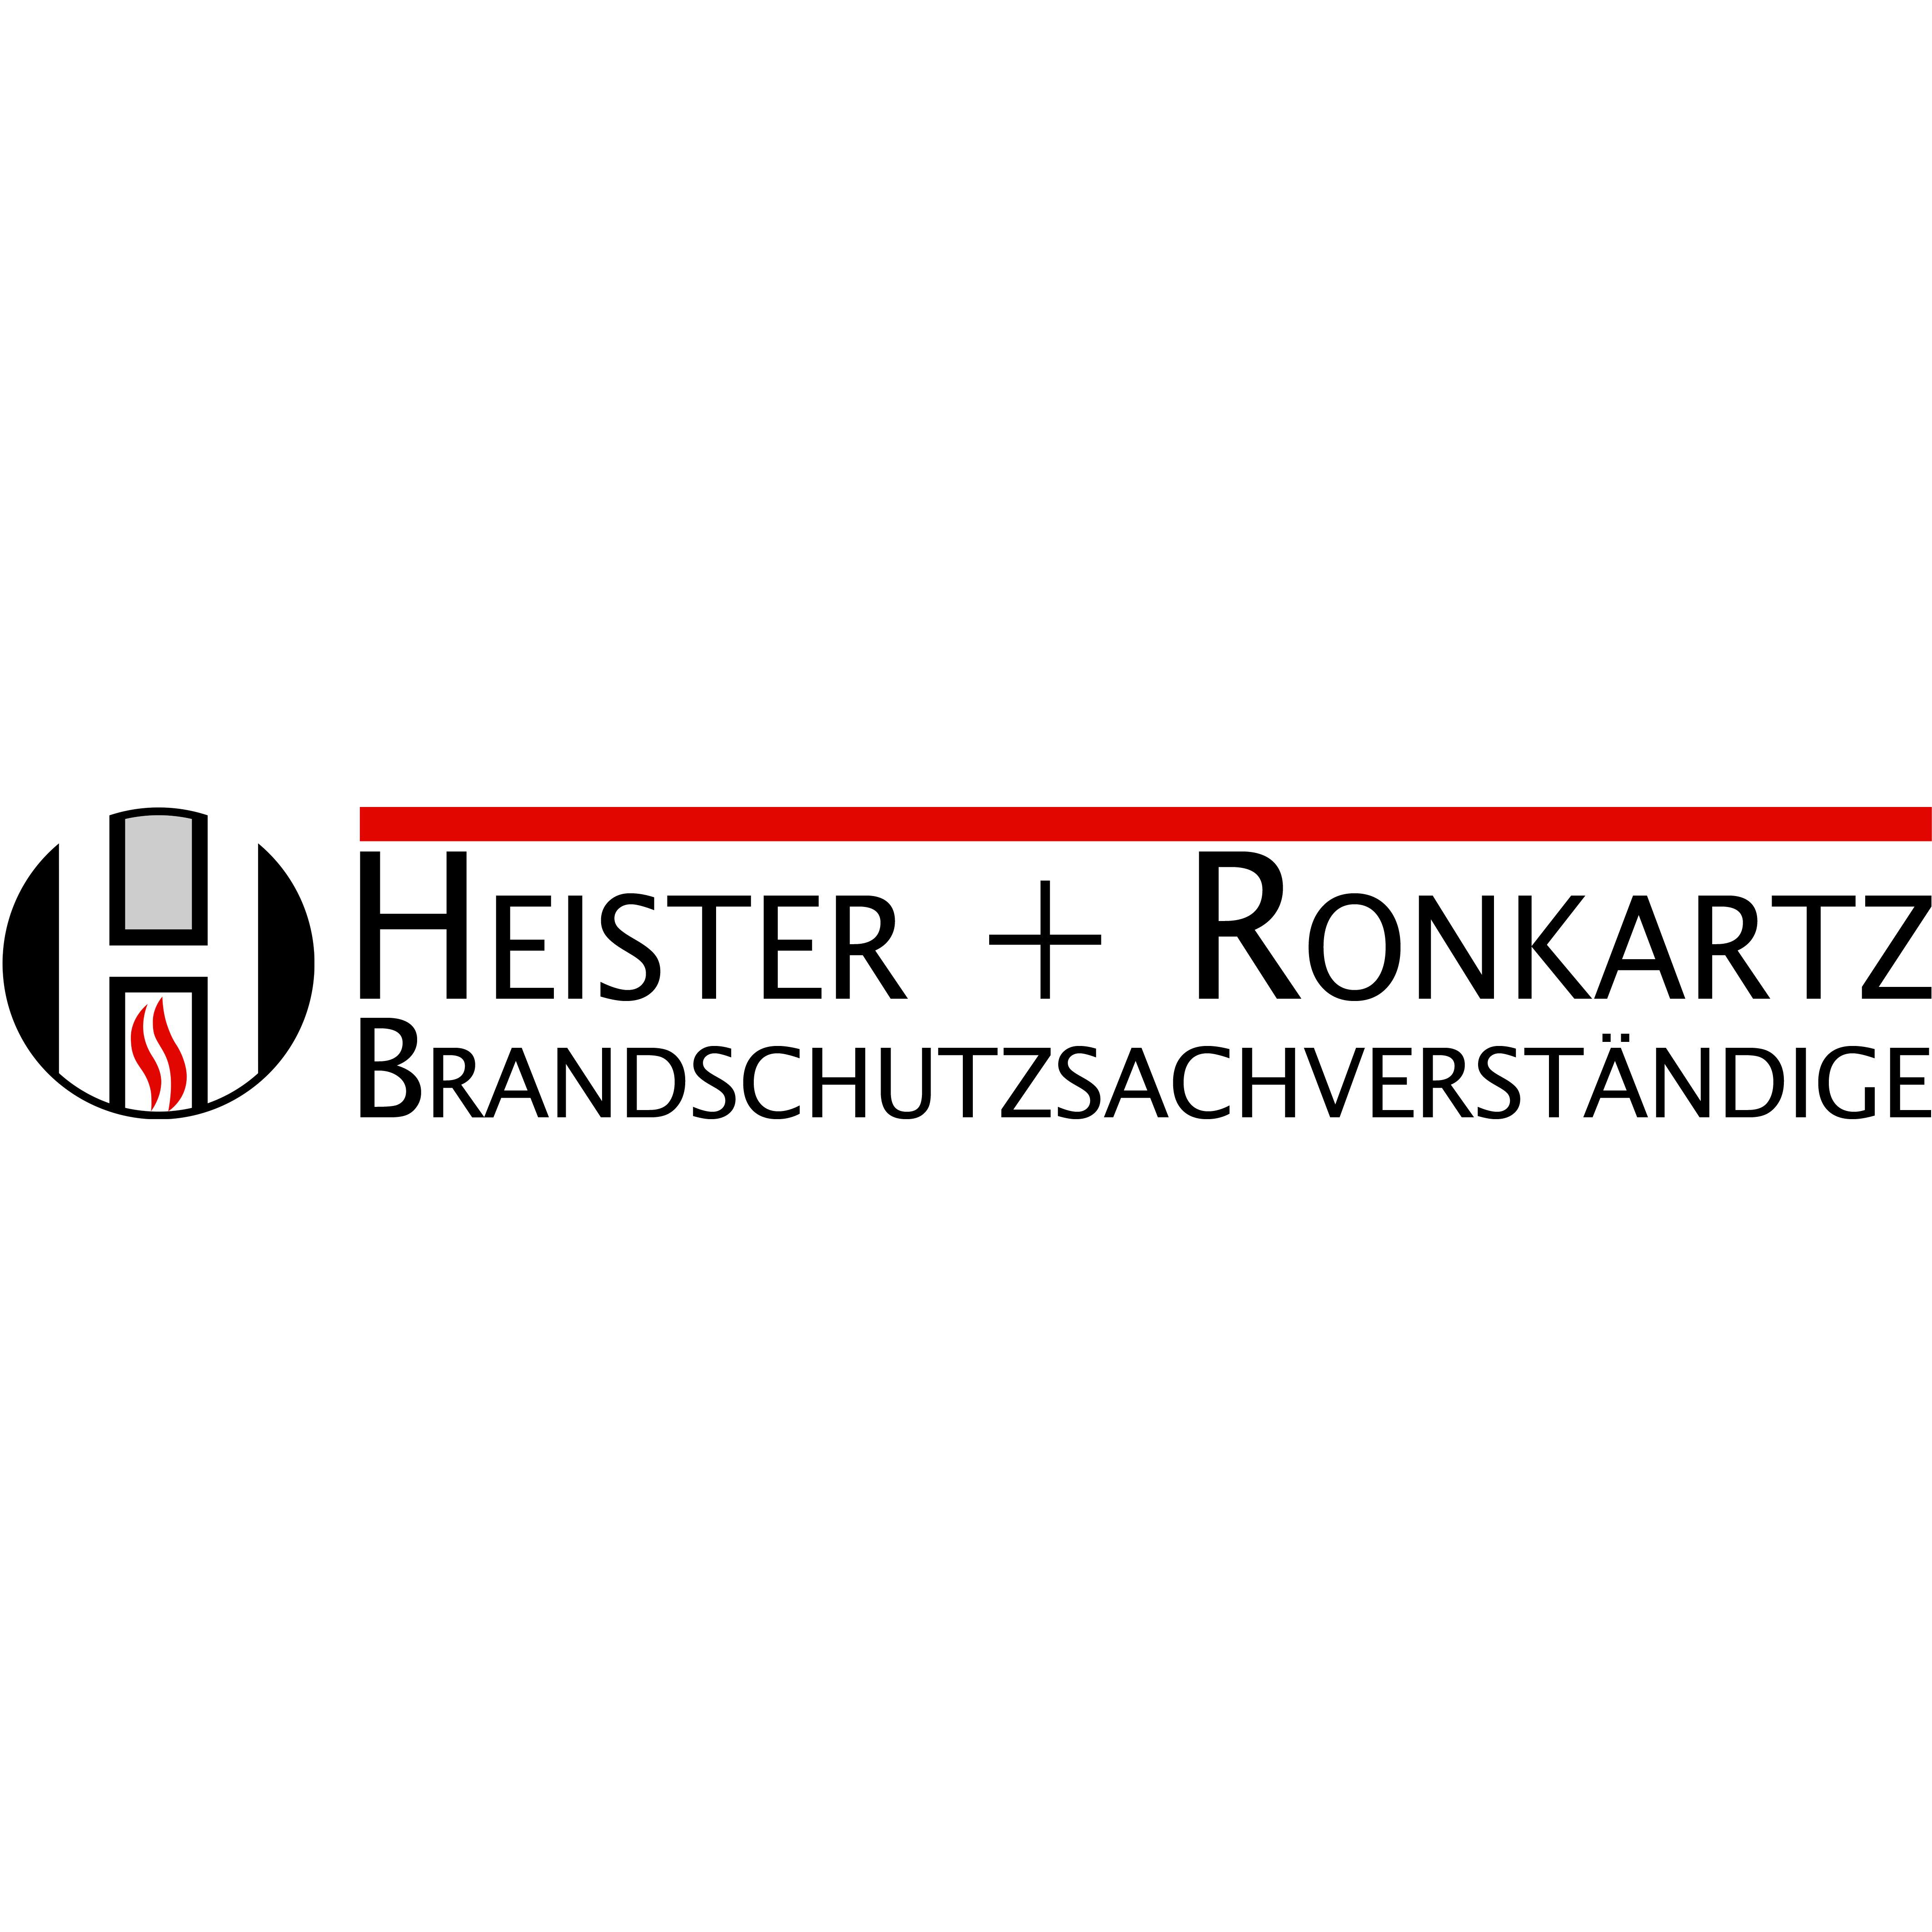 Heister + Ronkartz Brandschutzsachverständige Logo